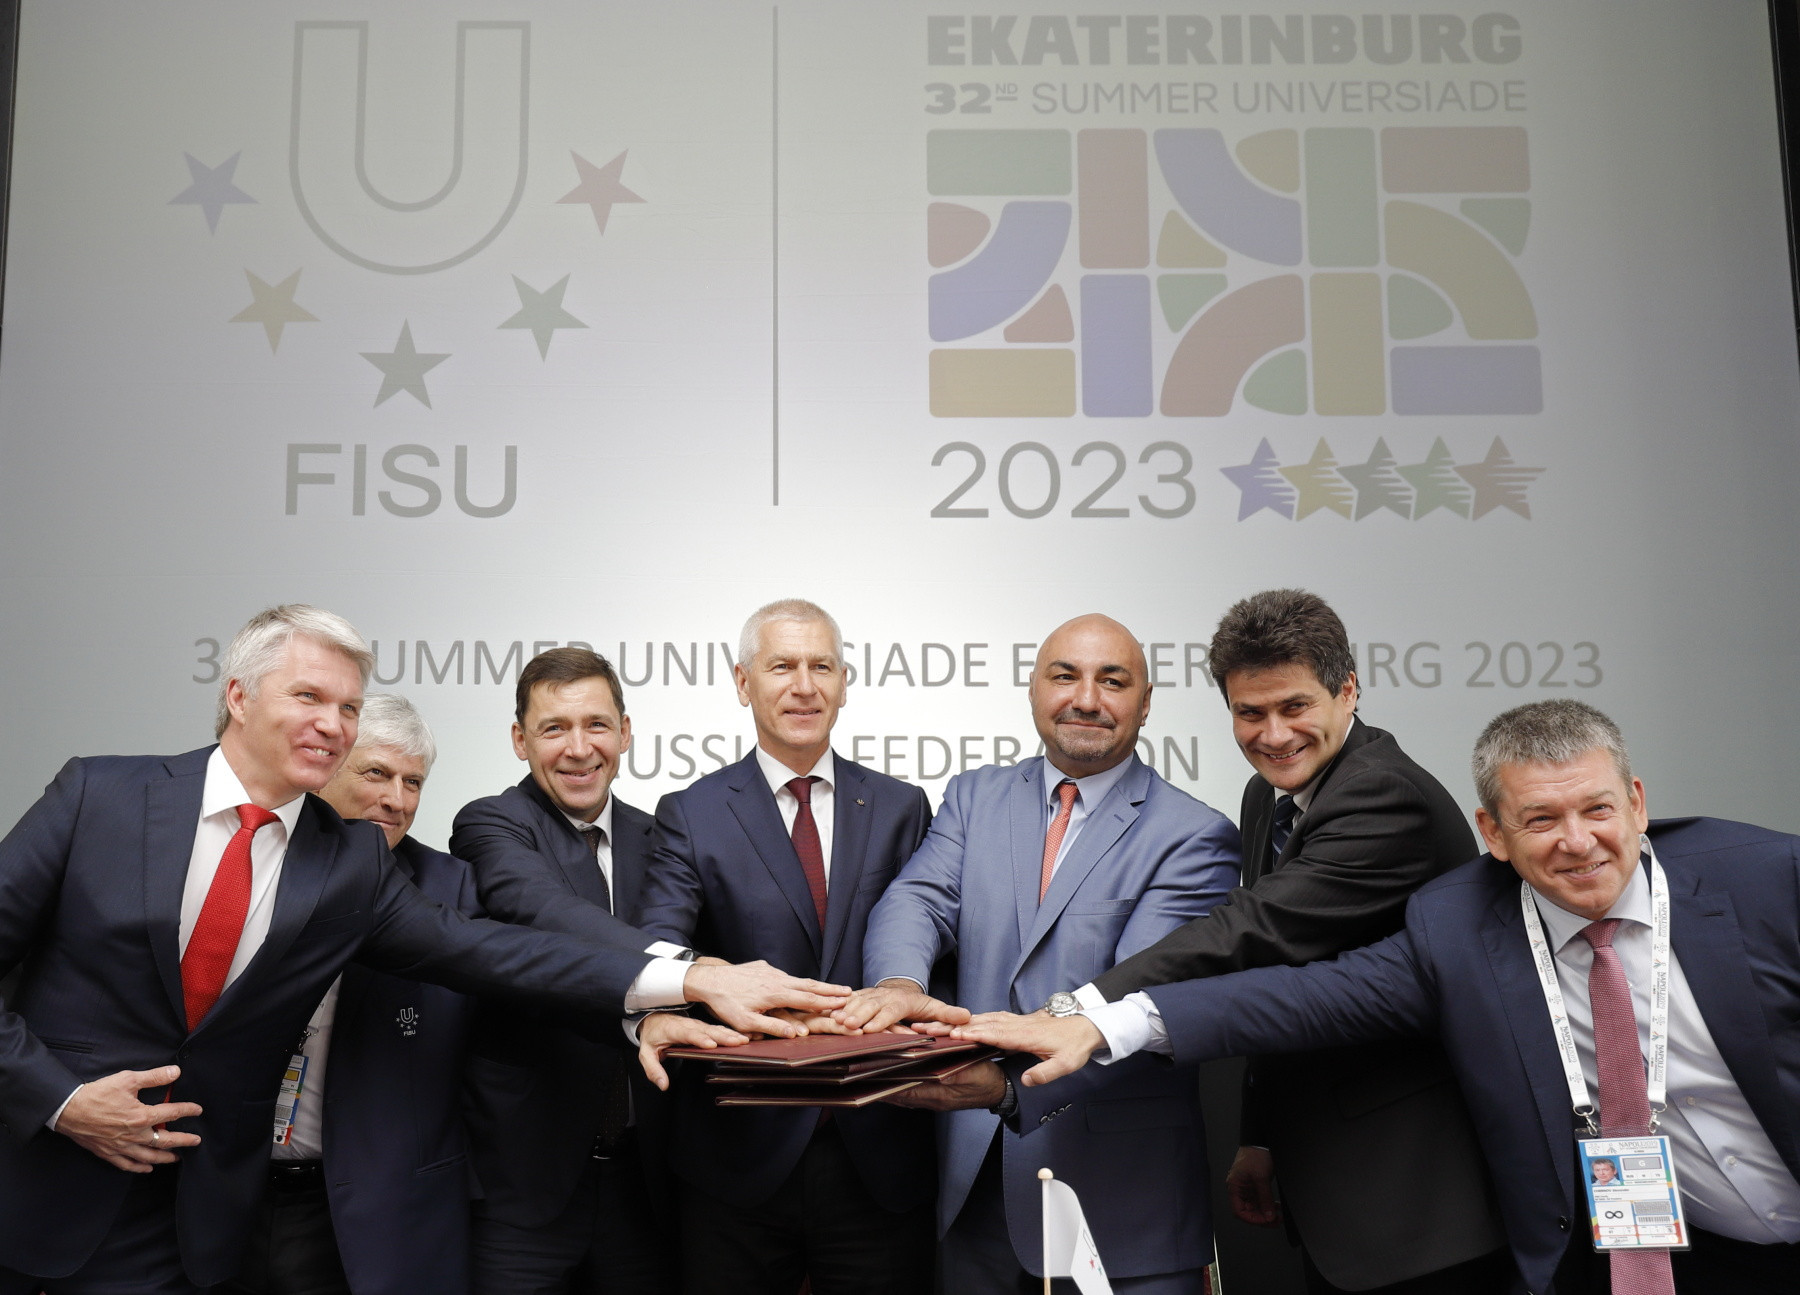 Yekaterinburg was awarded the 2023 Summer World University Games last year ©FISU